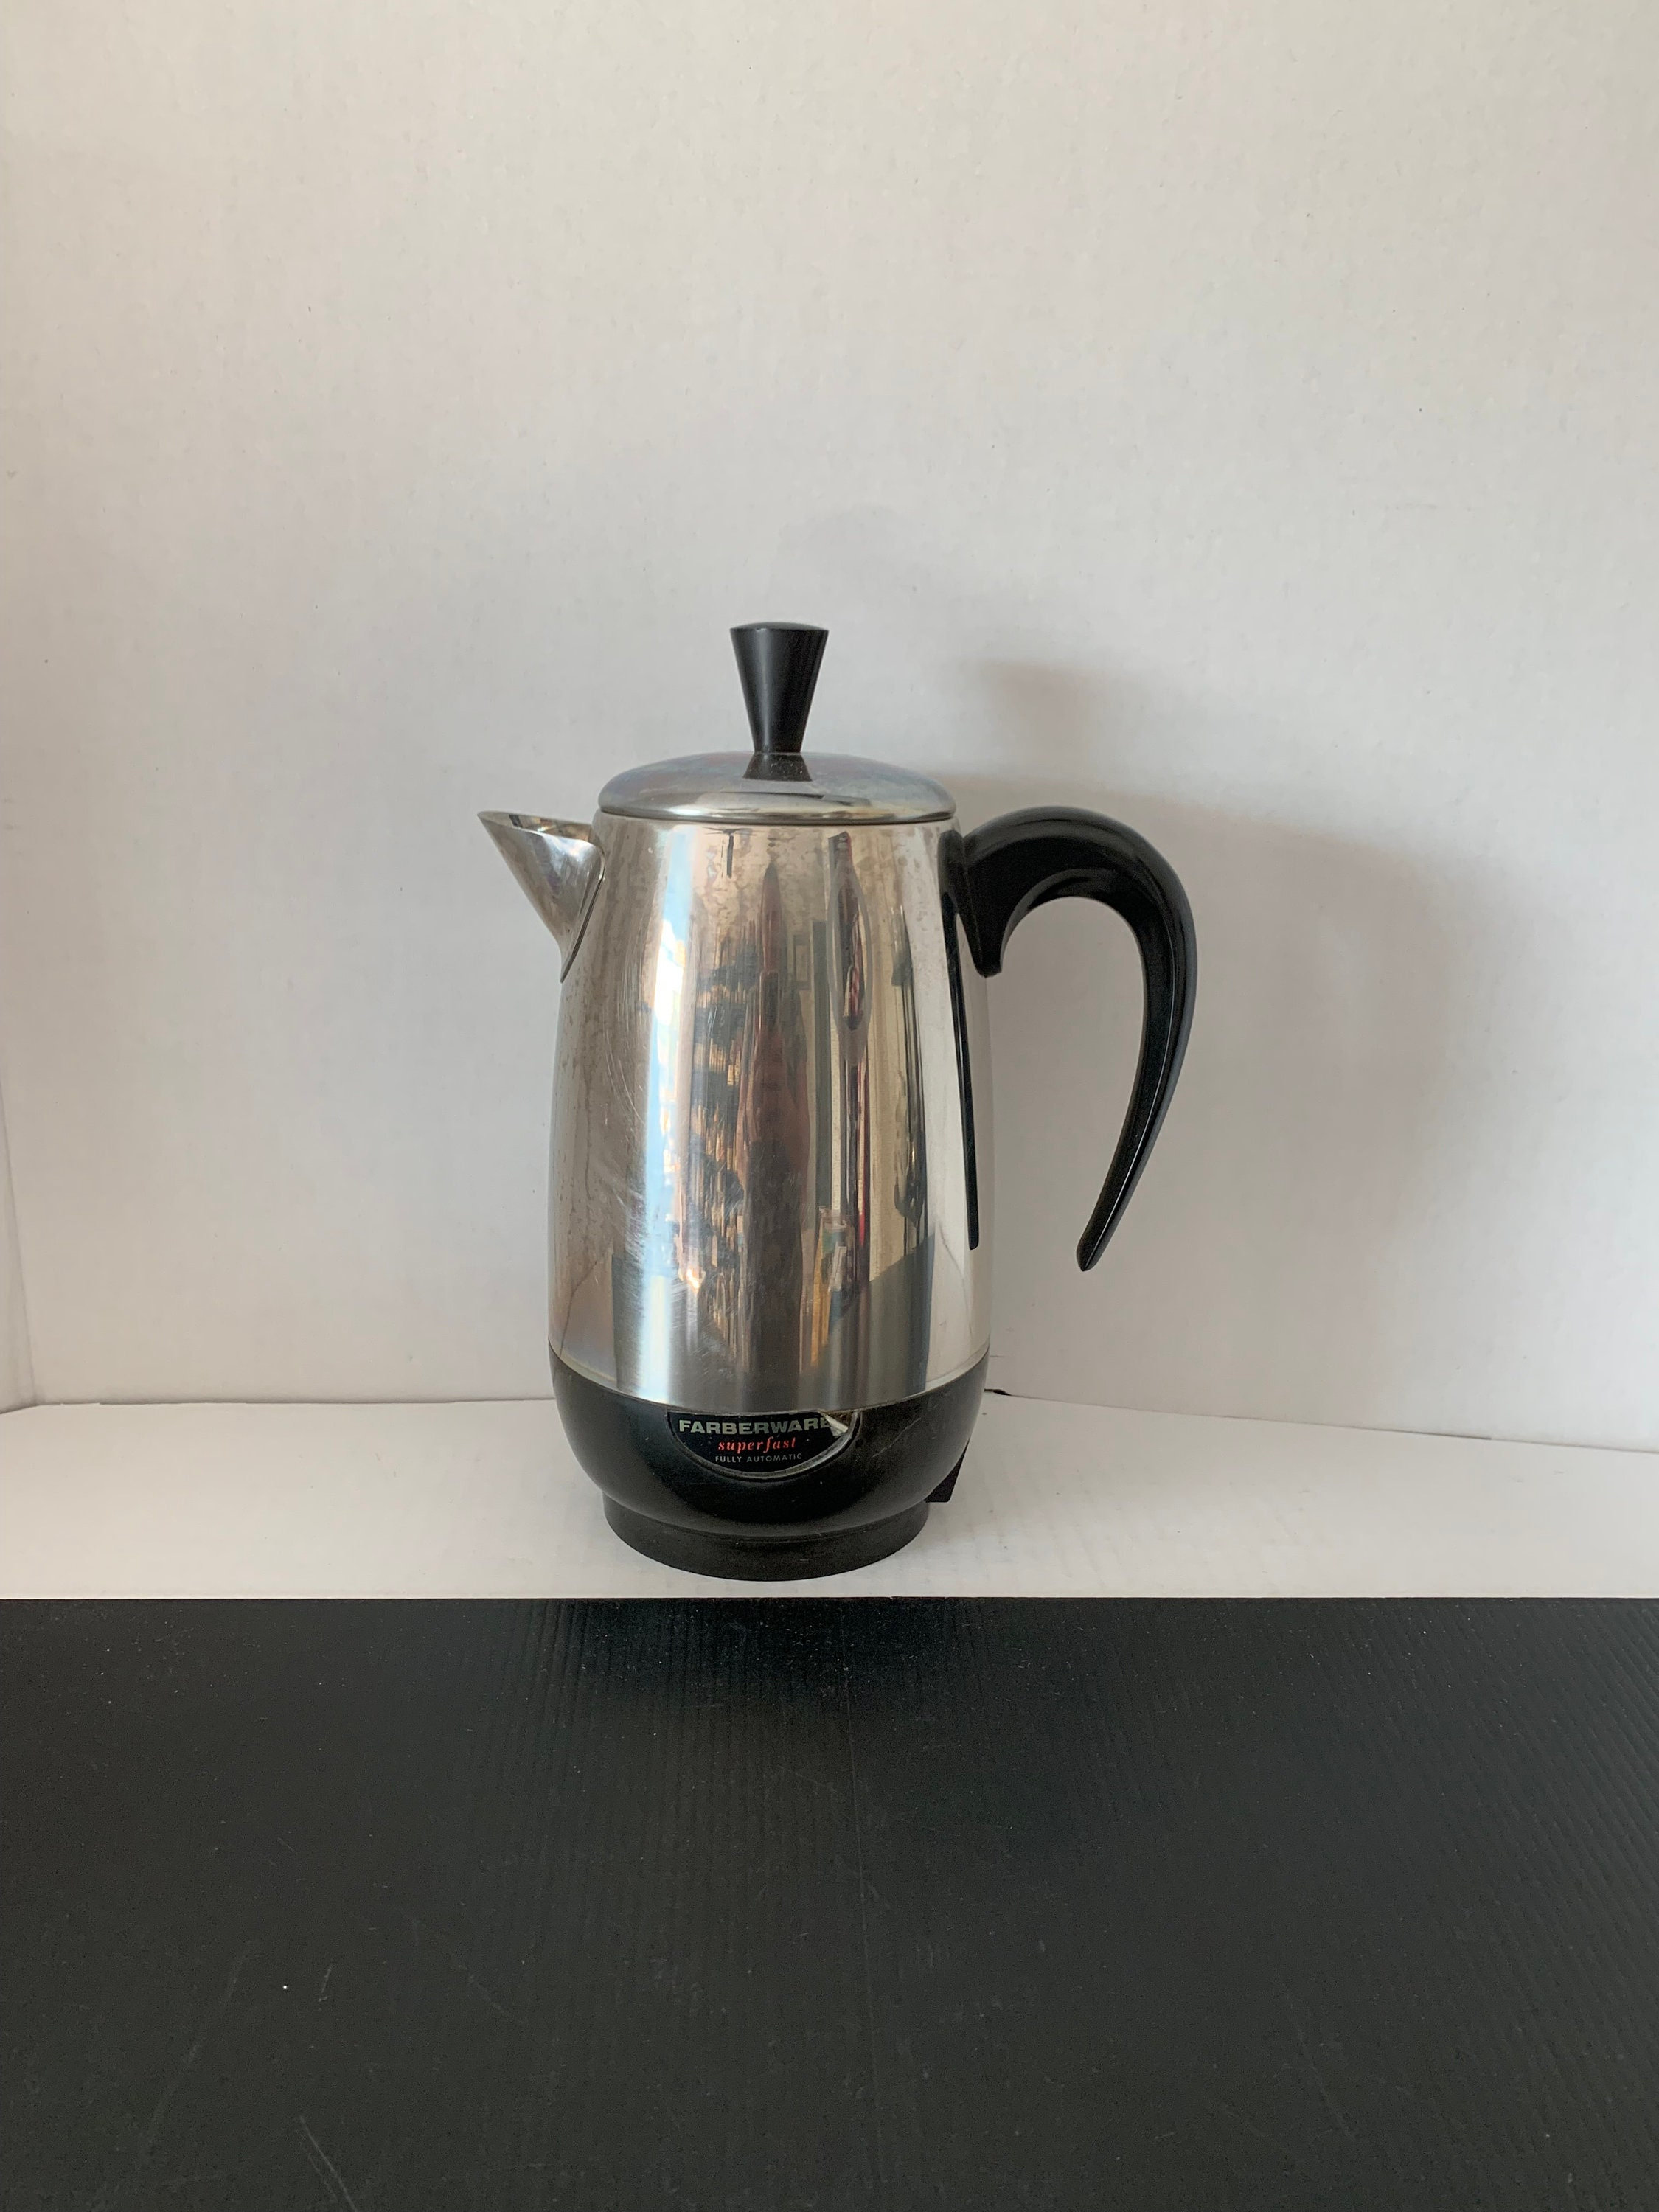 Farberware Chrome Percolator Coffee Pot Set, Faberware Chrome